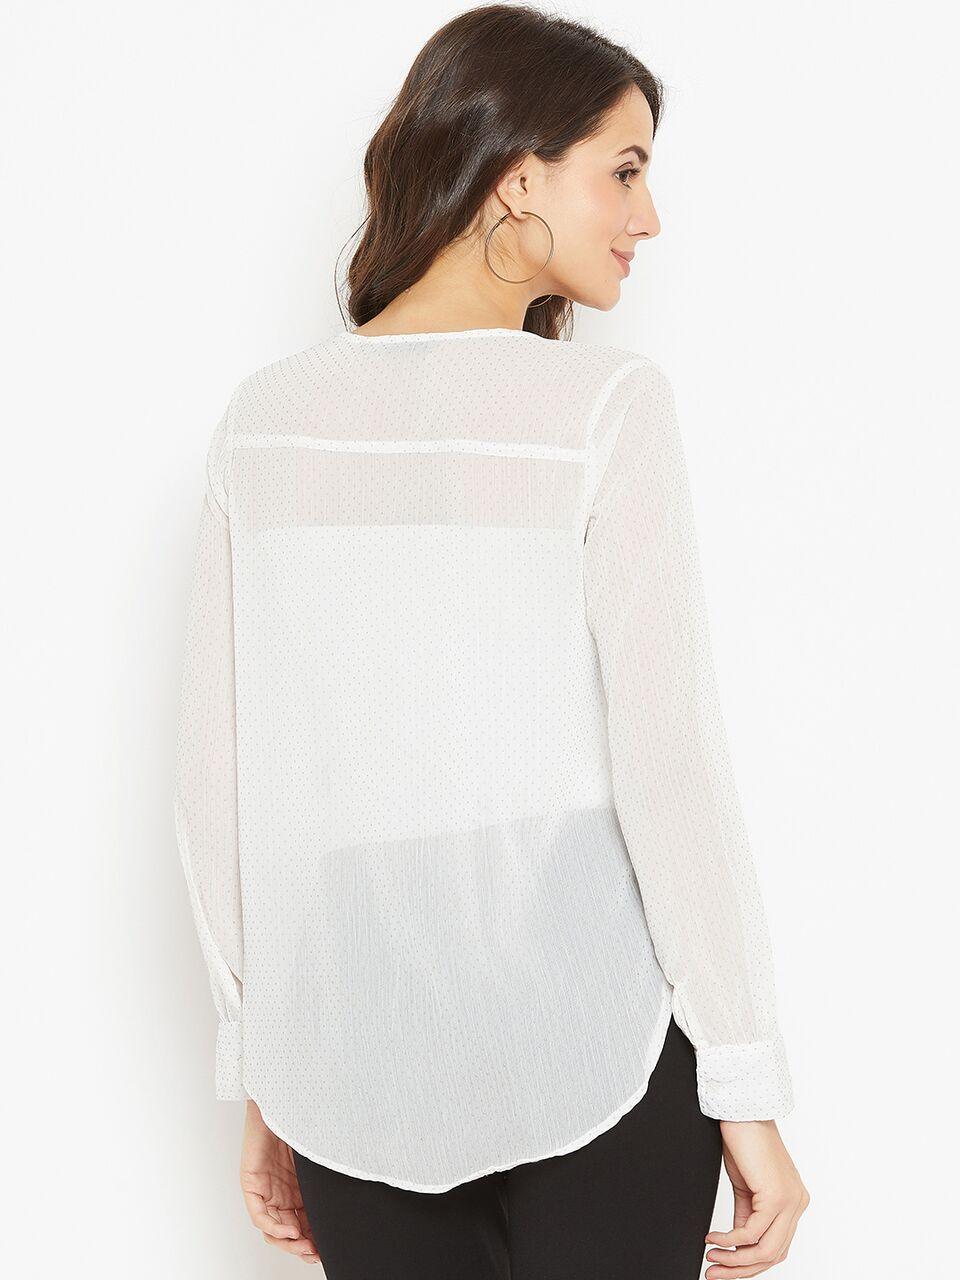 Transparent White Shirt  - Znxclothing